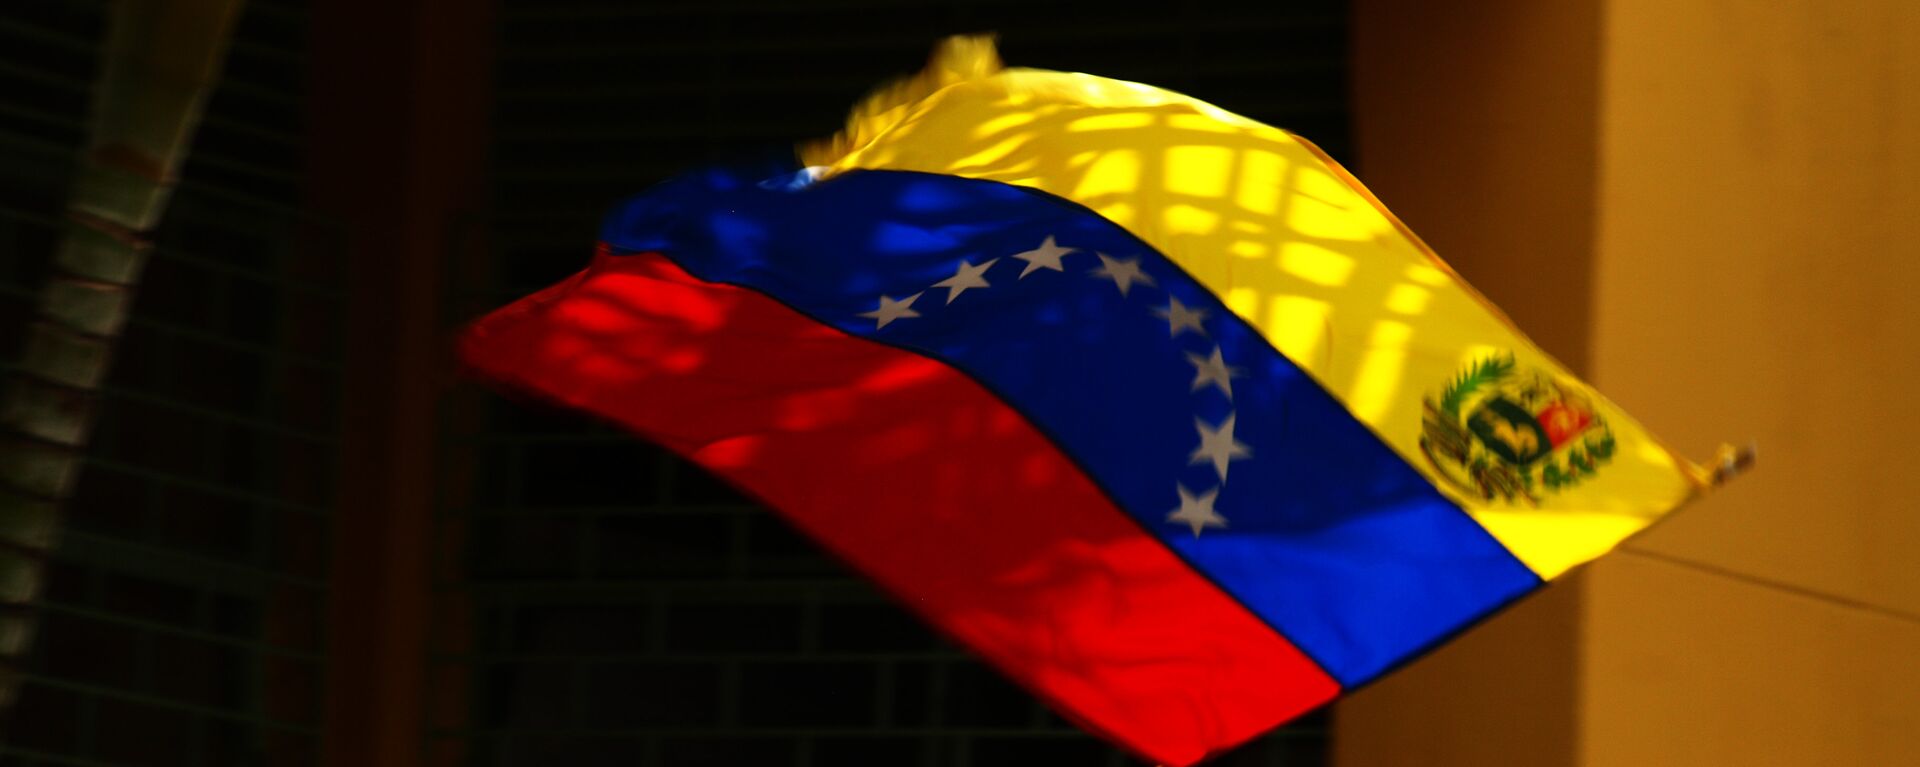 Bandera de Venezuela - Sputnik Mundo, 1920, 29.11.2021